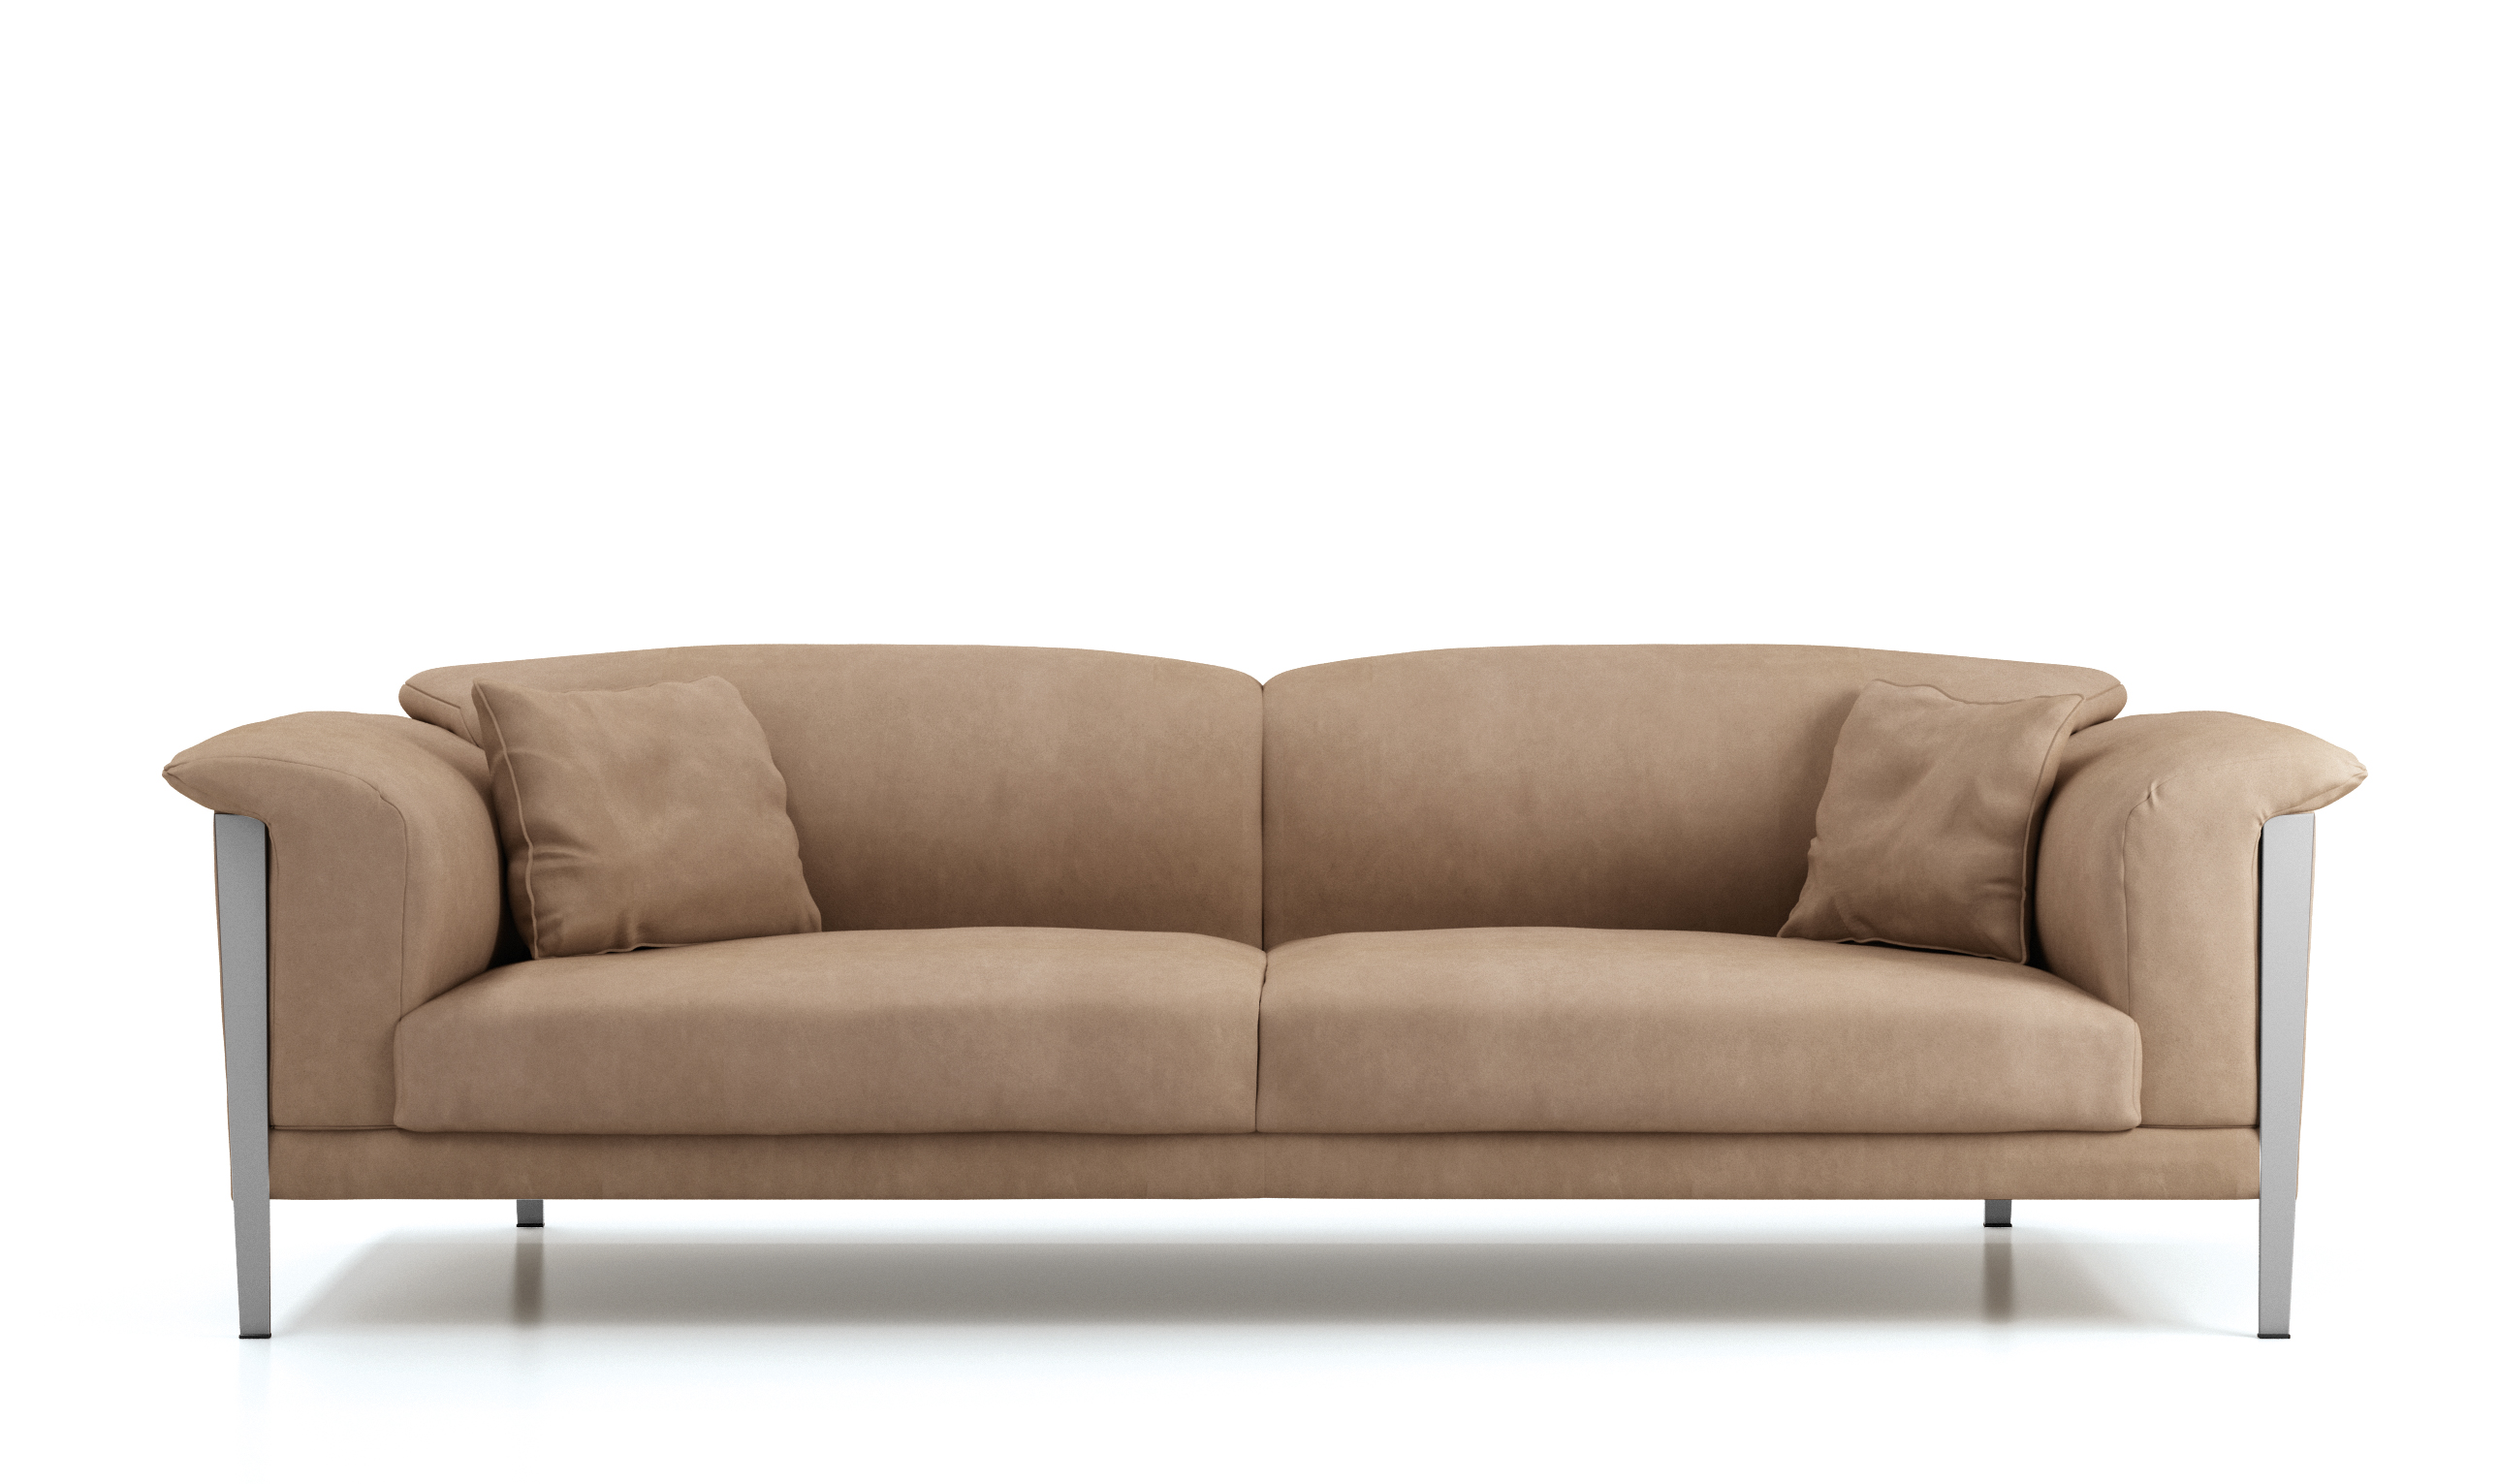 cream classic leather sofa couch